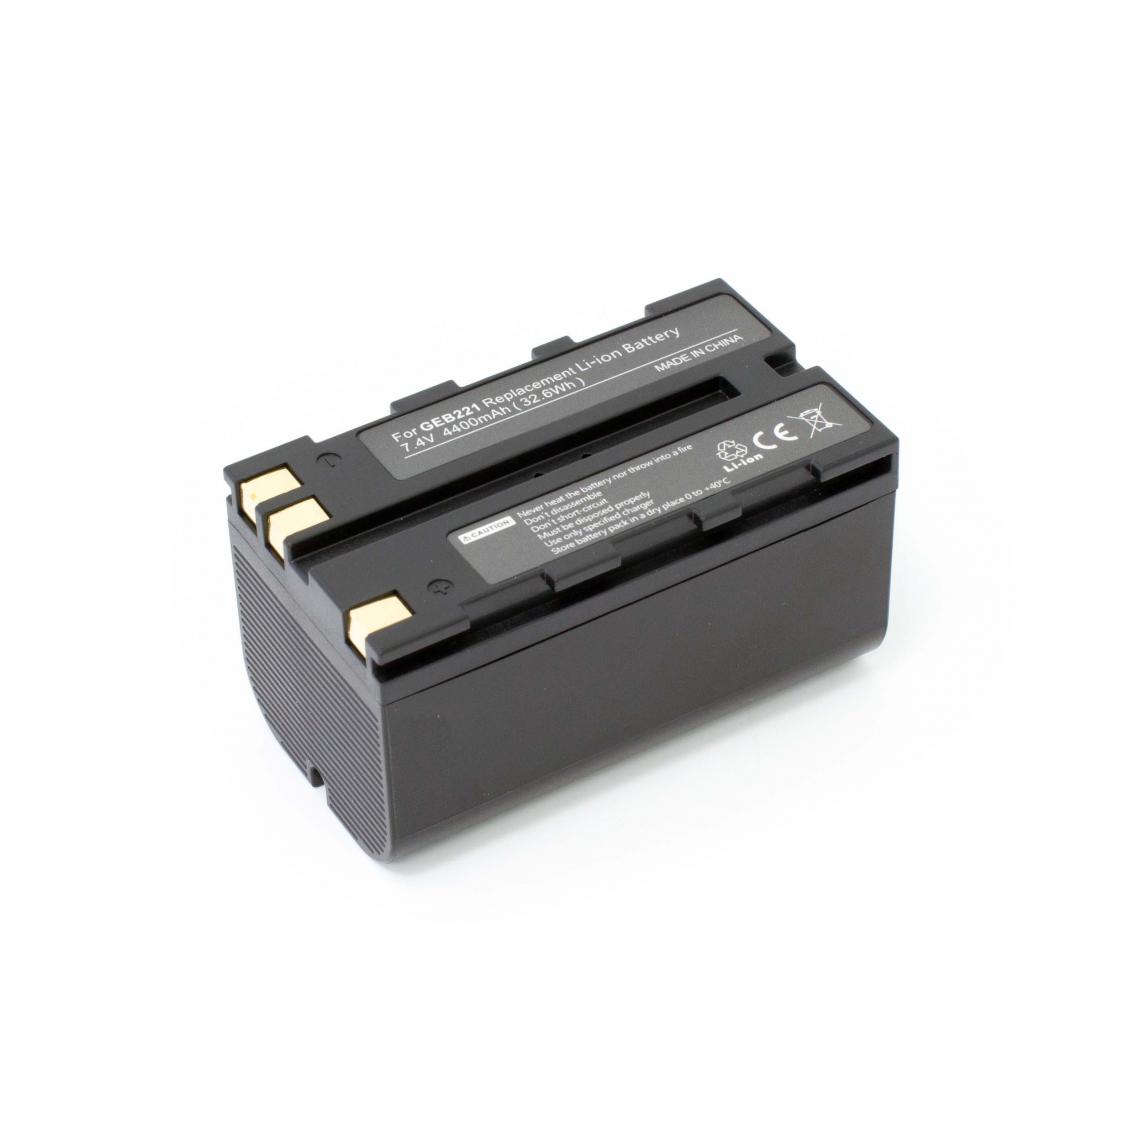 Vhbw - vhbw Batterie compatible avec Leica TS16 dispositif de mesure laser, outil de mesure (4400mAh, 7,4V, Li-ion) - Piles rechargeables